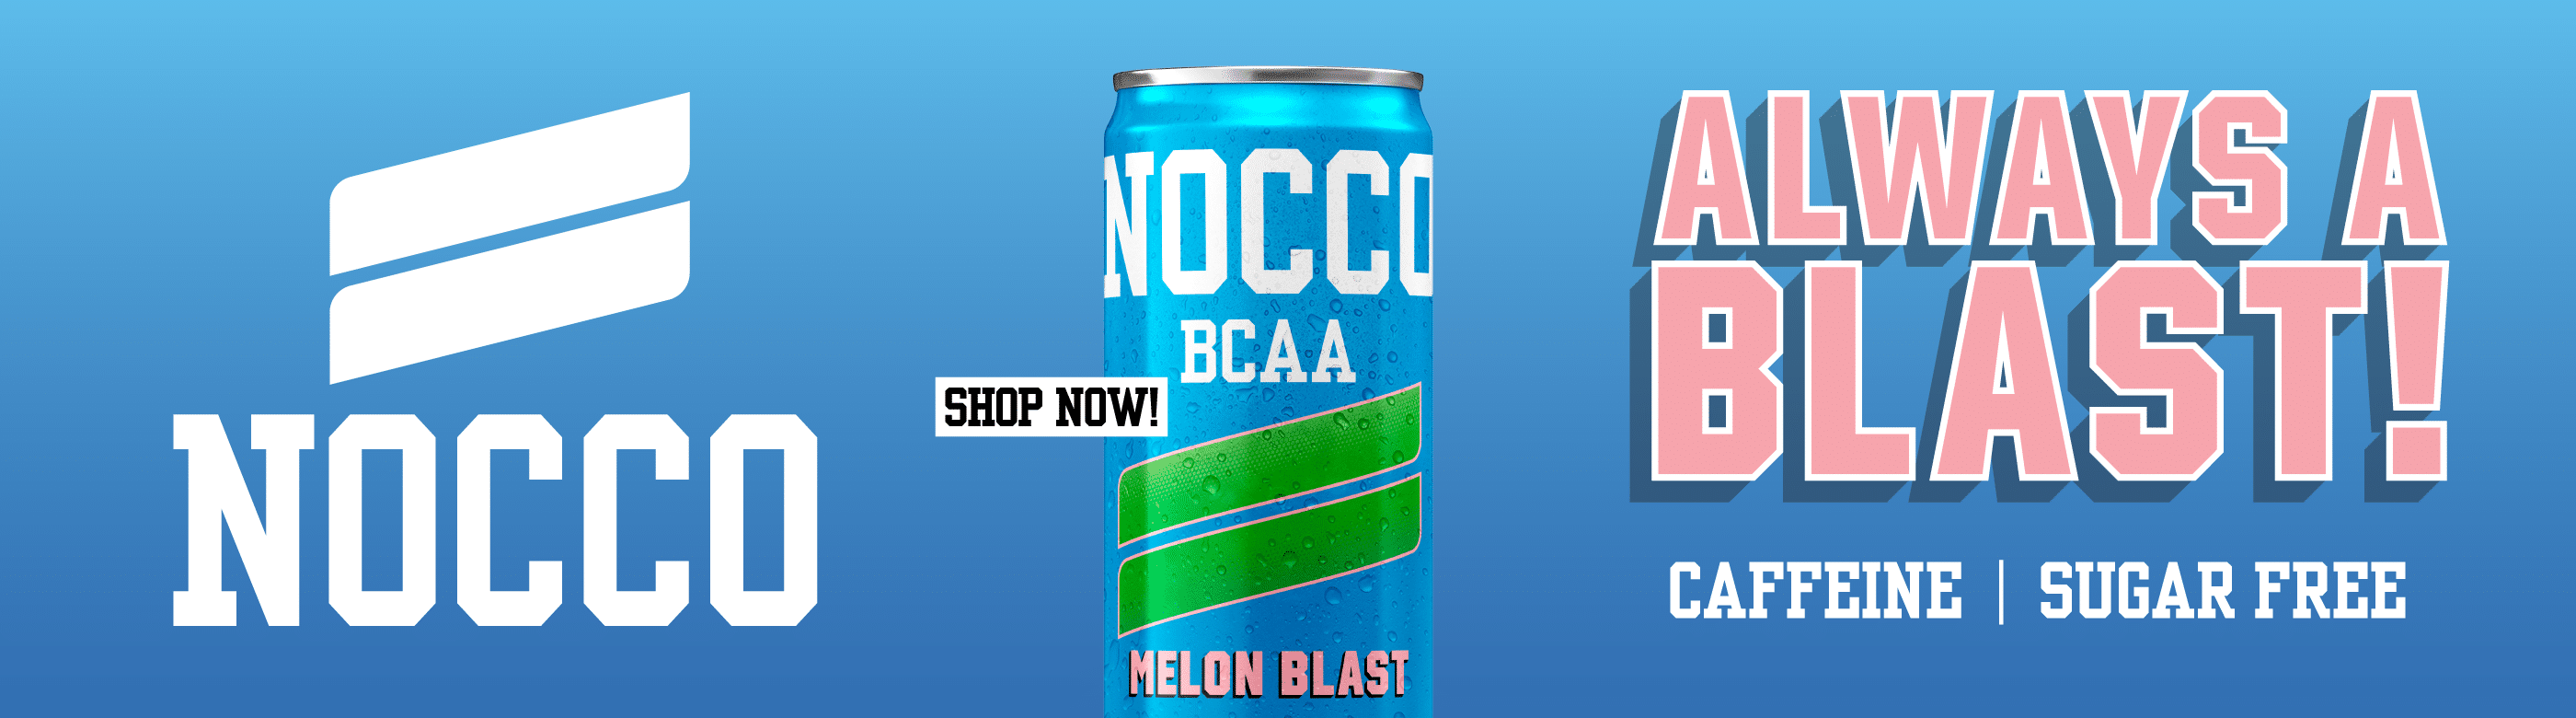 Nocco Melon Blast launch blogpost banner desktop